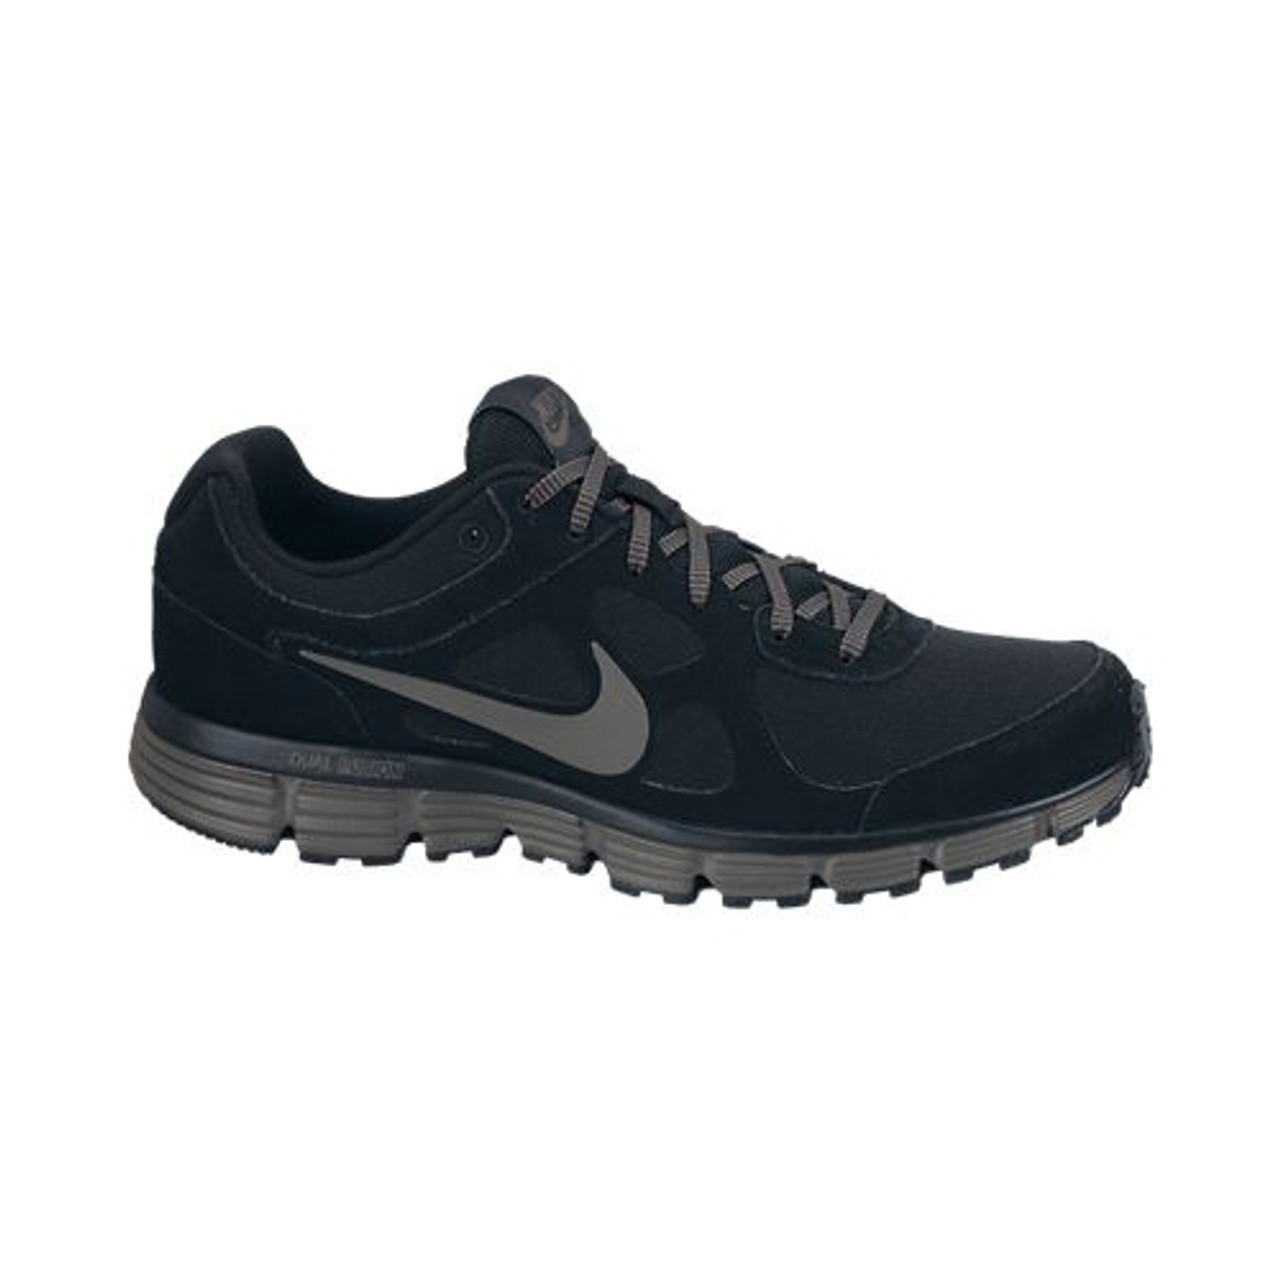 Nike Dual Fusion Forever Black/Grey Running Shoes - Black/Dark Grey | Discount Nike Men's Athletic & More - Shoolu.com | Shoolu.com